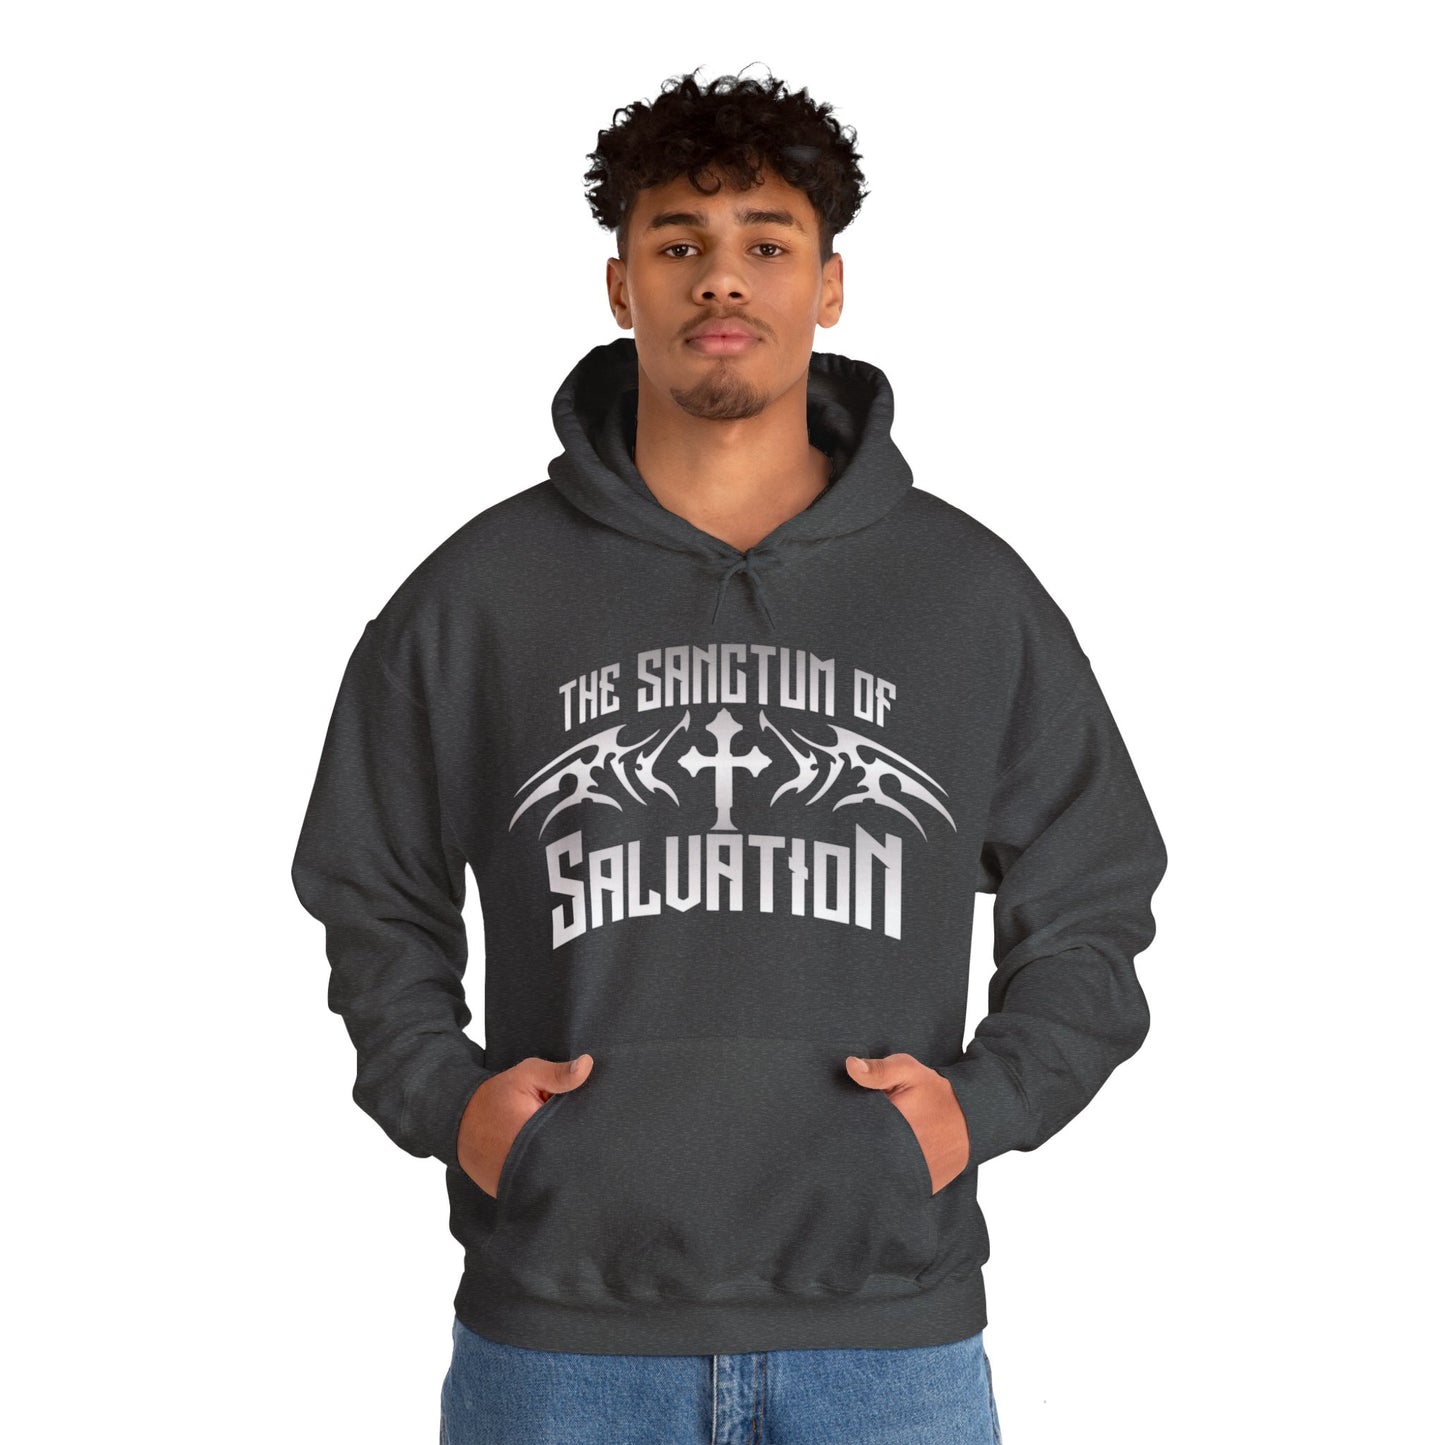 THE SANCTUM OF SALVATION - Hooded Sweatshirt